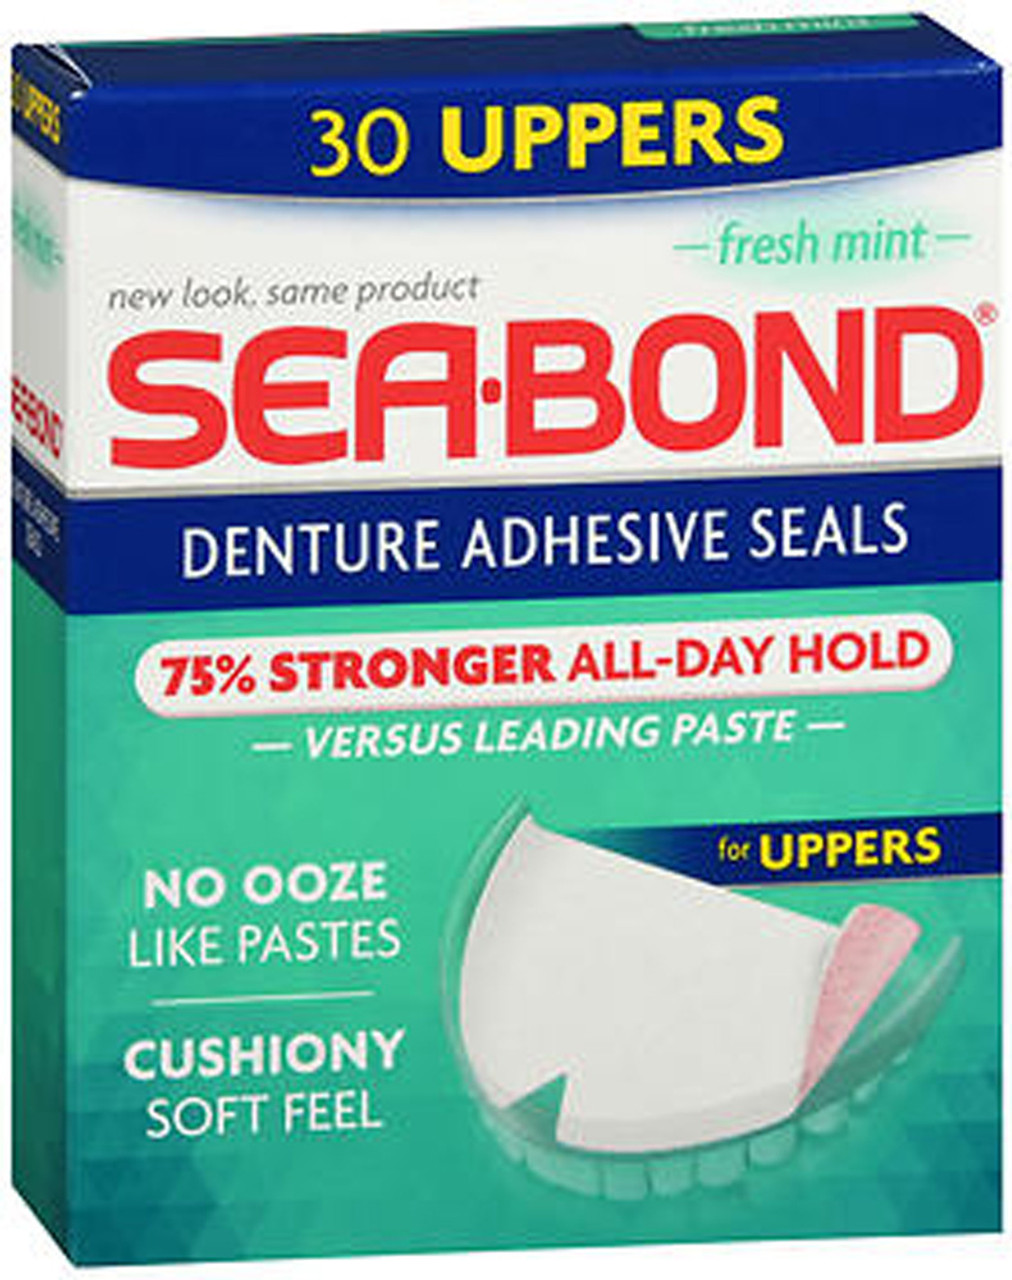 About SeaBond Denture Adhesive Seals